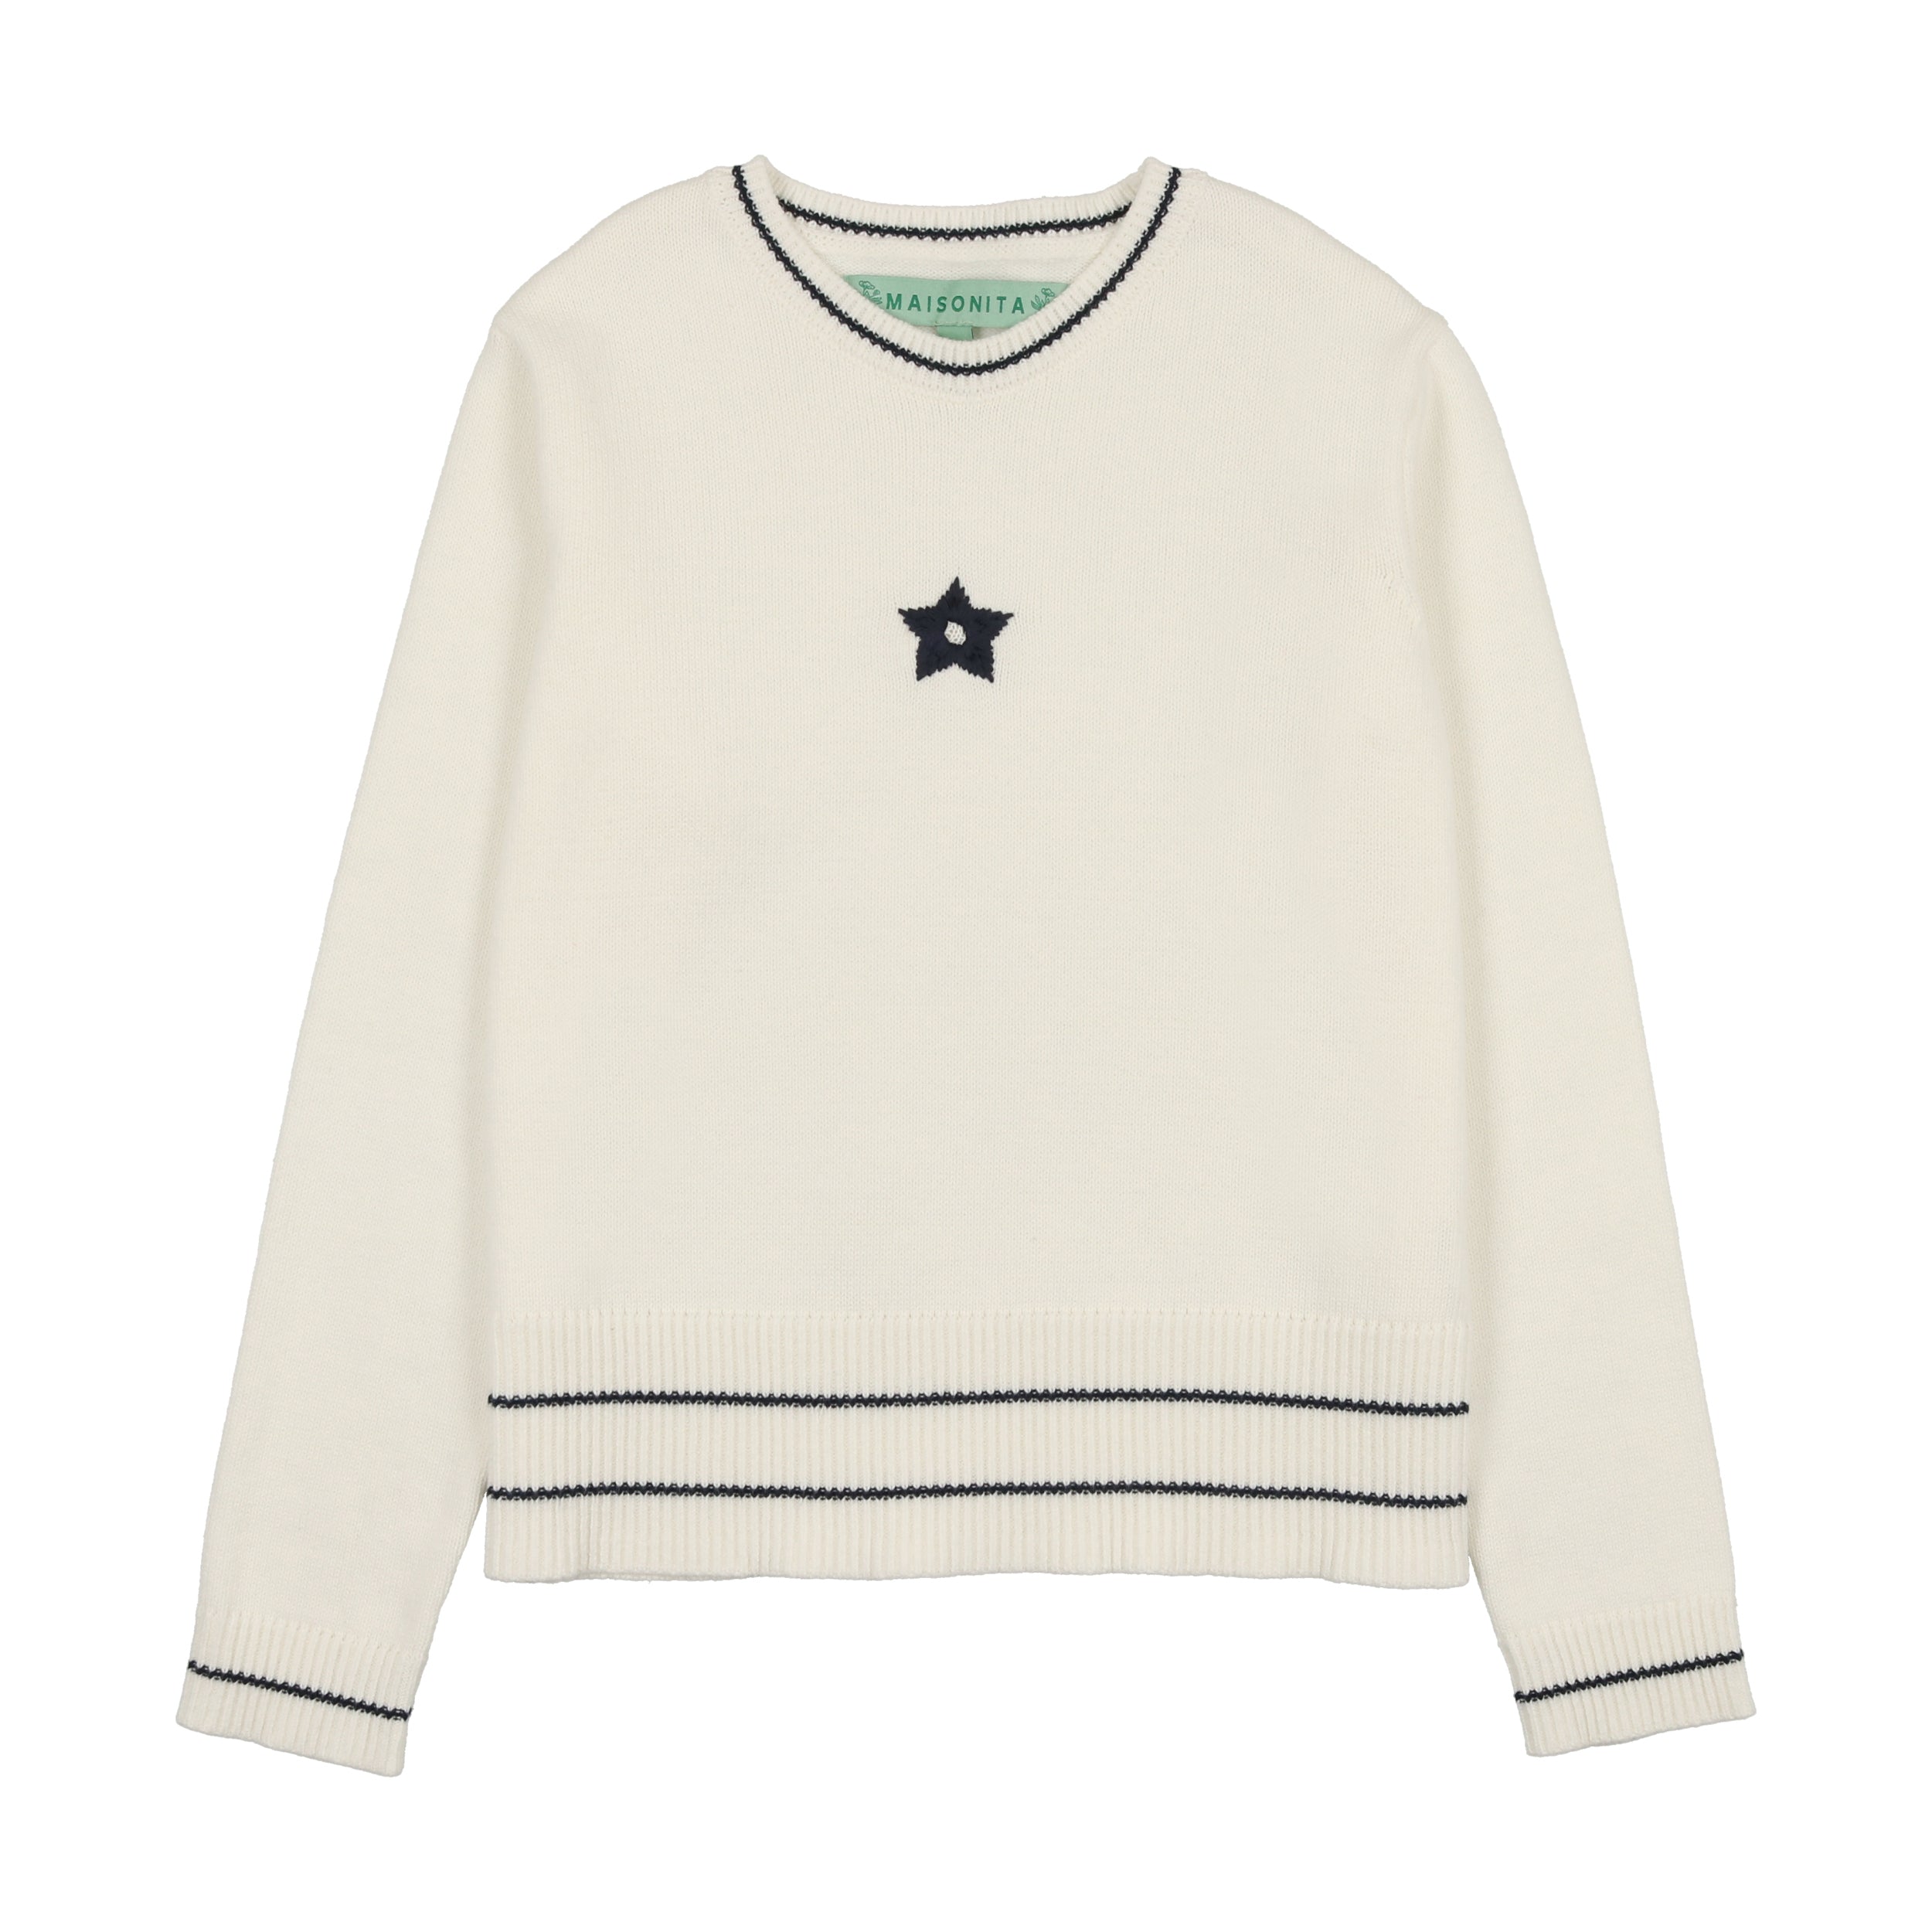 Cream Sweater with Navy Star Sweater